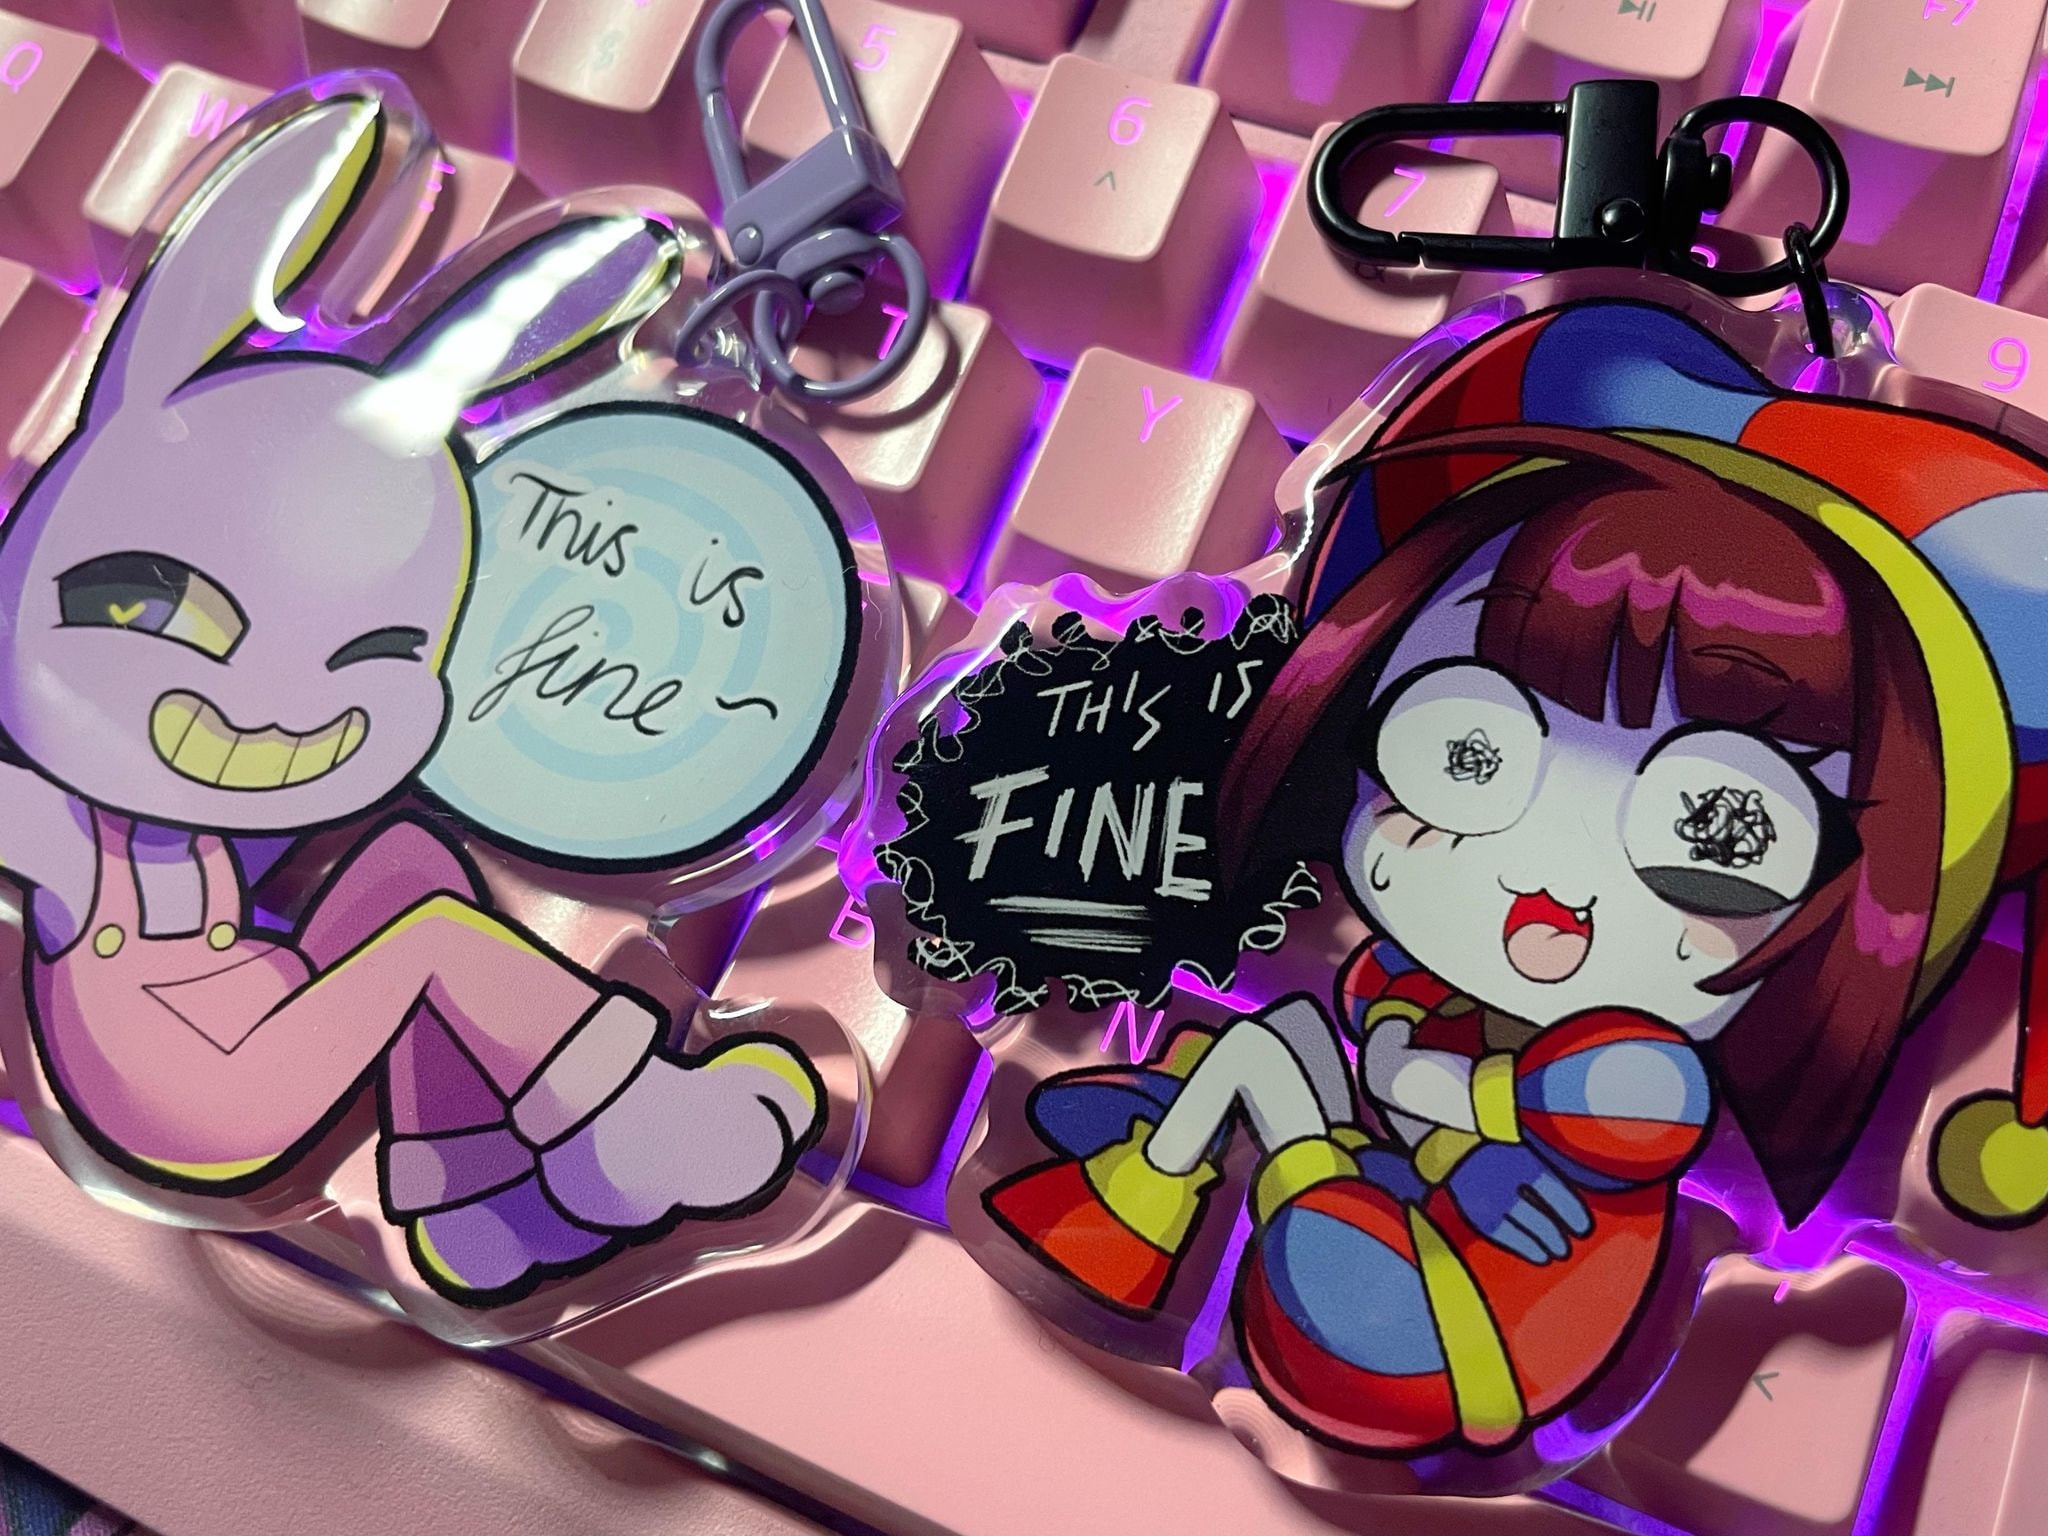 FNAF Keychains Kawaii Anime Figure Five Nights At Freddy's Key Chains Cute  Keychain Car Pendants Decoration Kids Gifts Toys